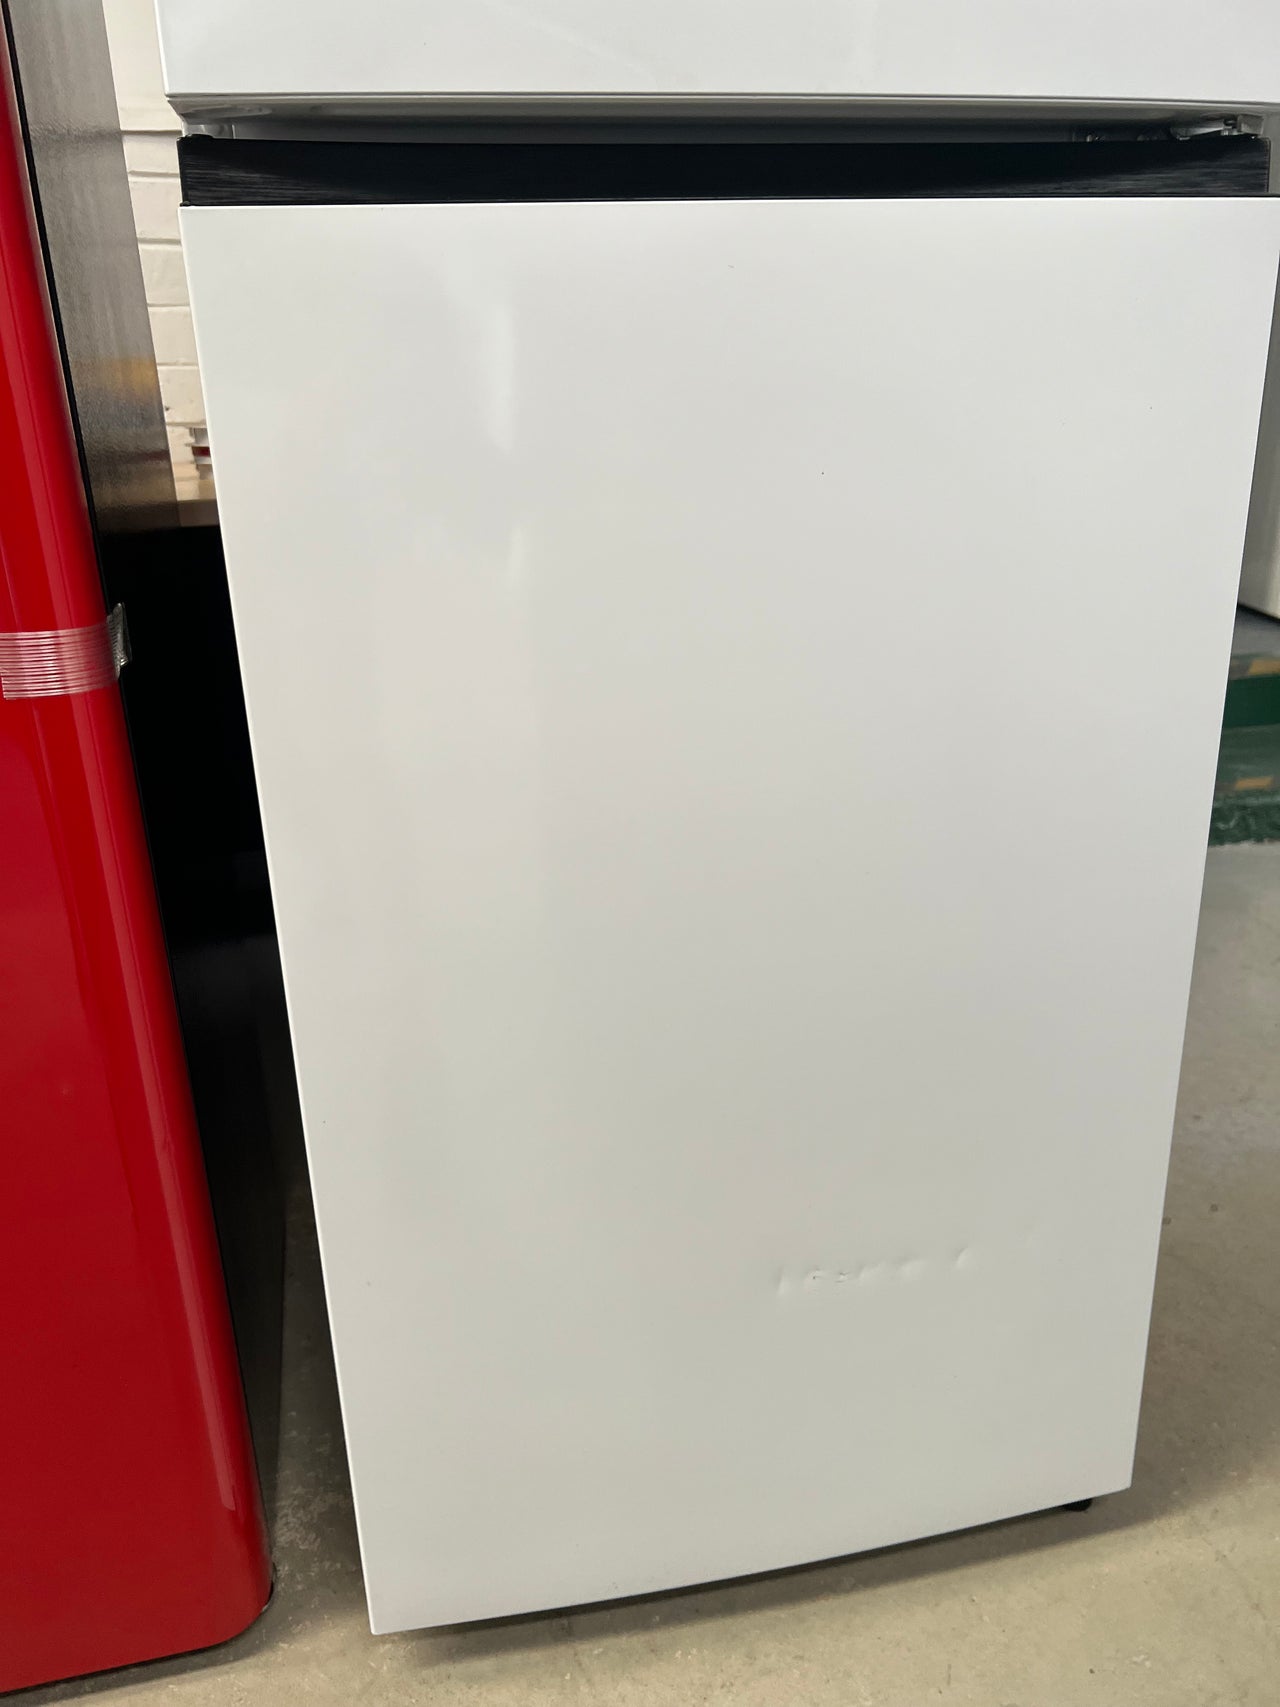 Factory second Hisense 205L Top Mount Frost Free Refrigerator HRTF205 - Second Hand Appliances Geebung